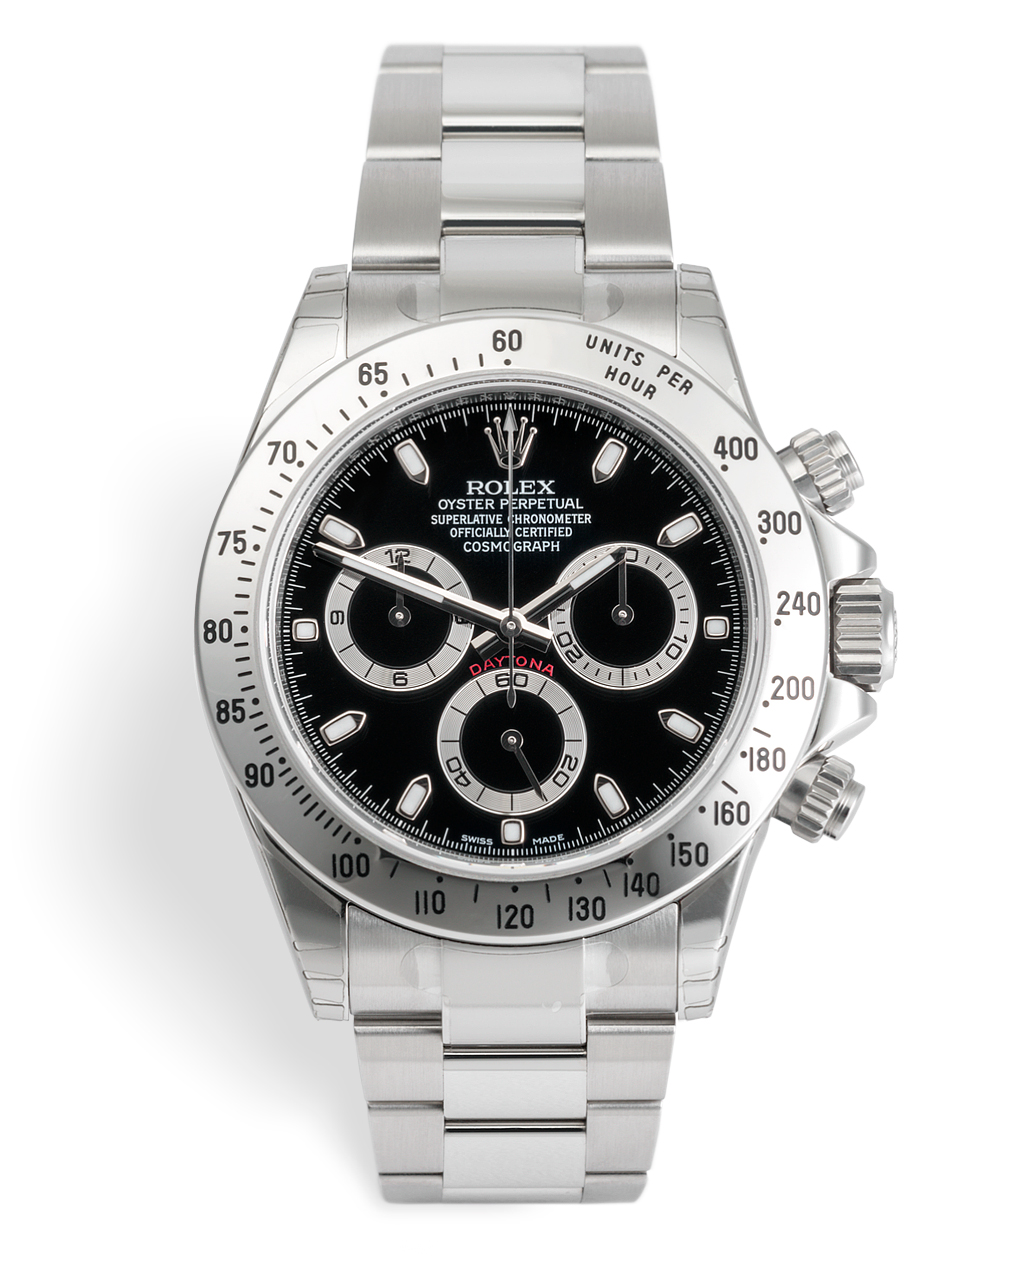 Rolex Cosmograph Daytona Watches | ref 116520 | Chromalight 'Box ...